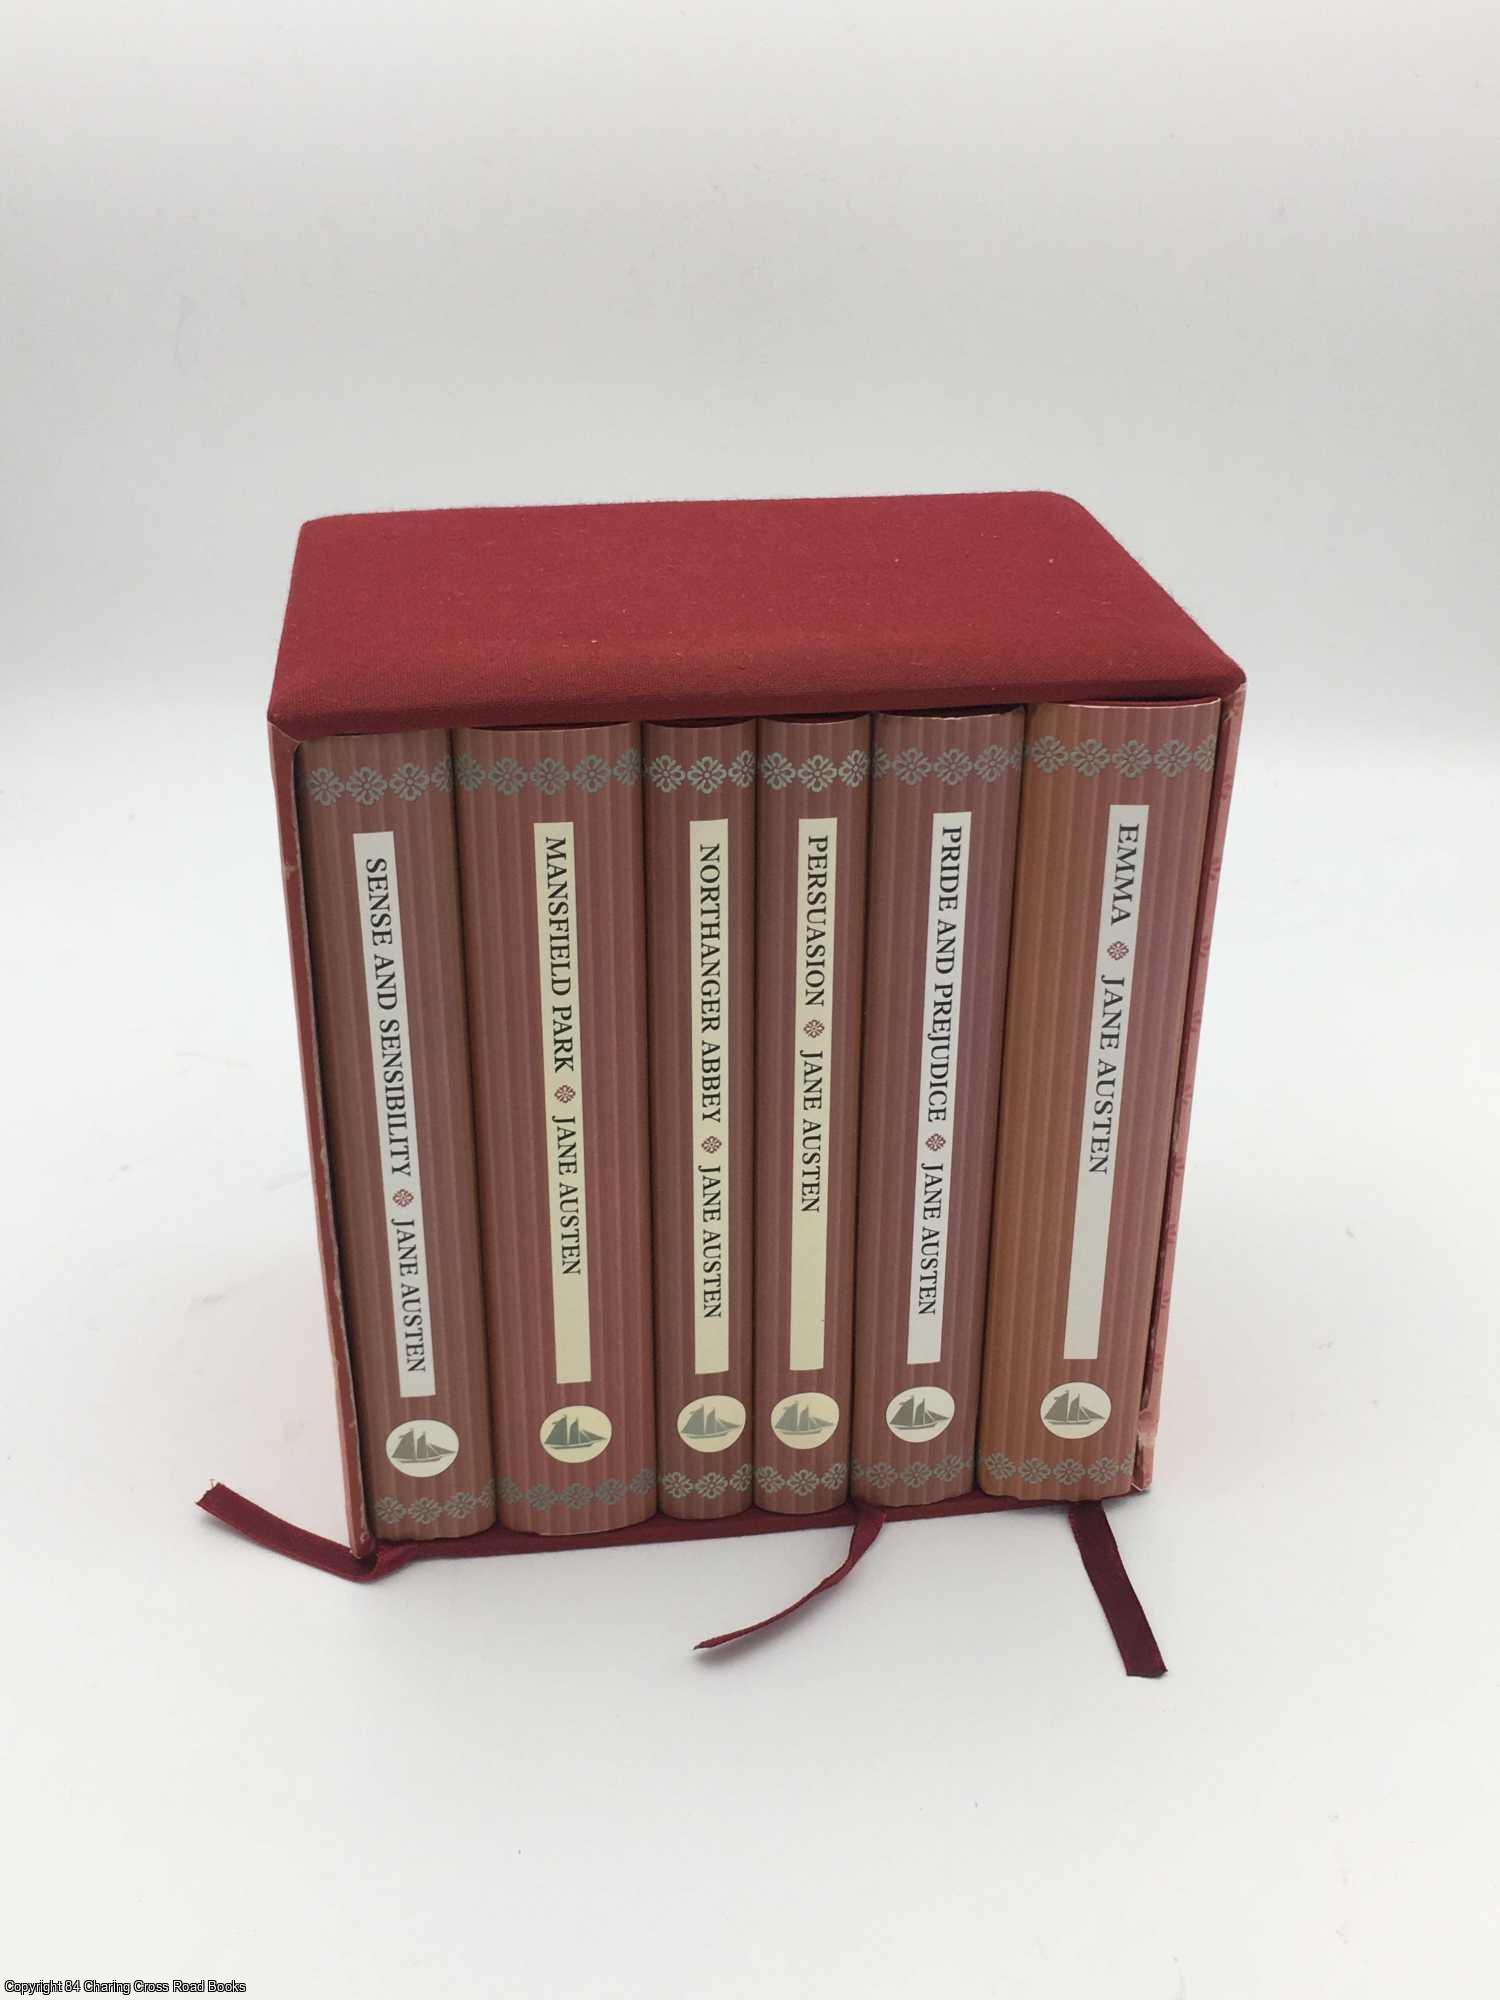 Austen, Jane - Jane Austen 6-Book Box Set: Emma, Pride and Prejudice, Sense and Sensibility, Mansfield Park, Northanger Abbey and Persuasion